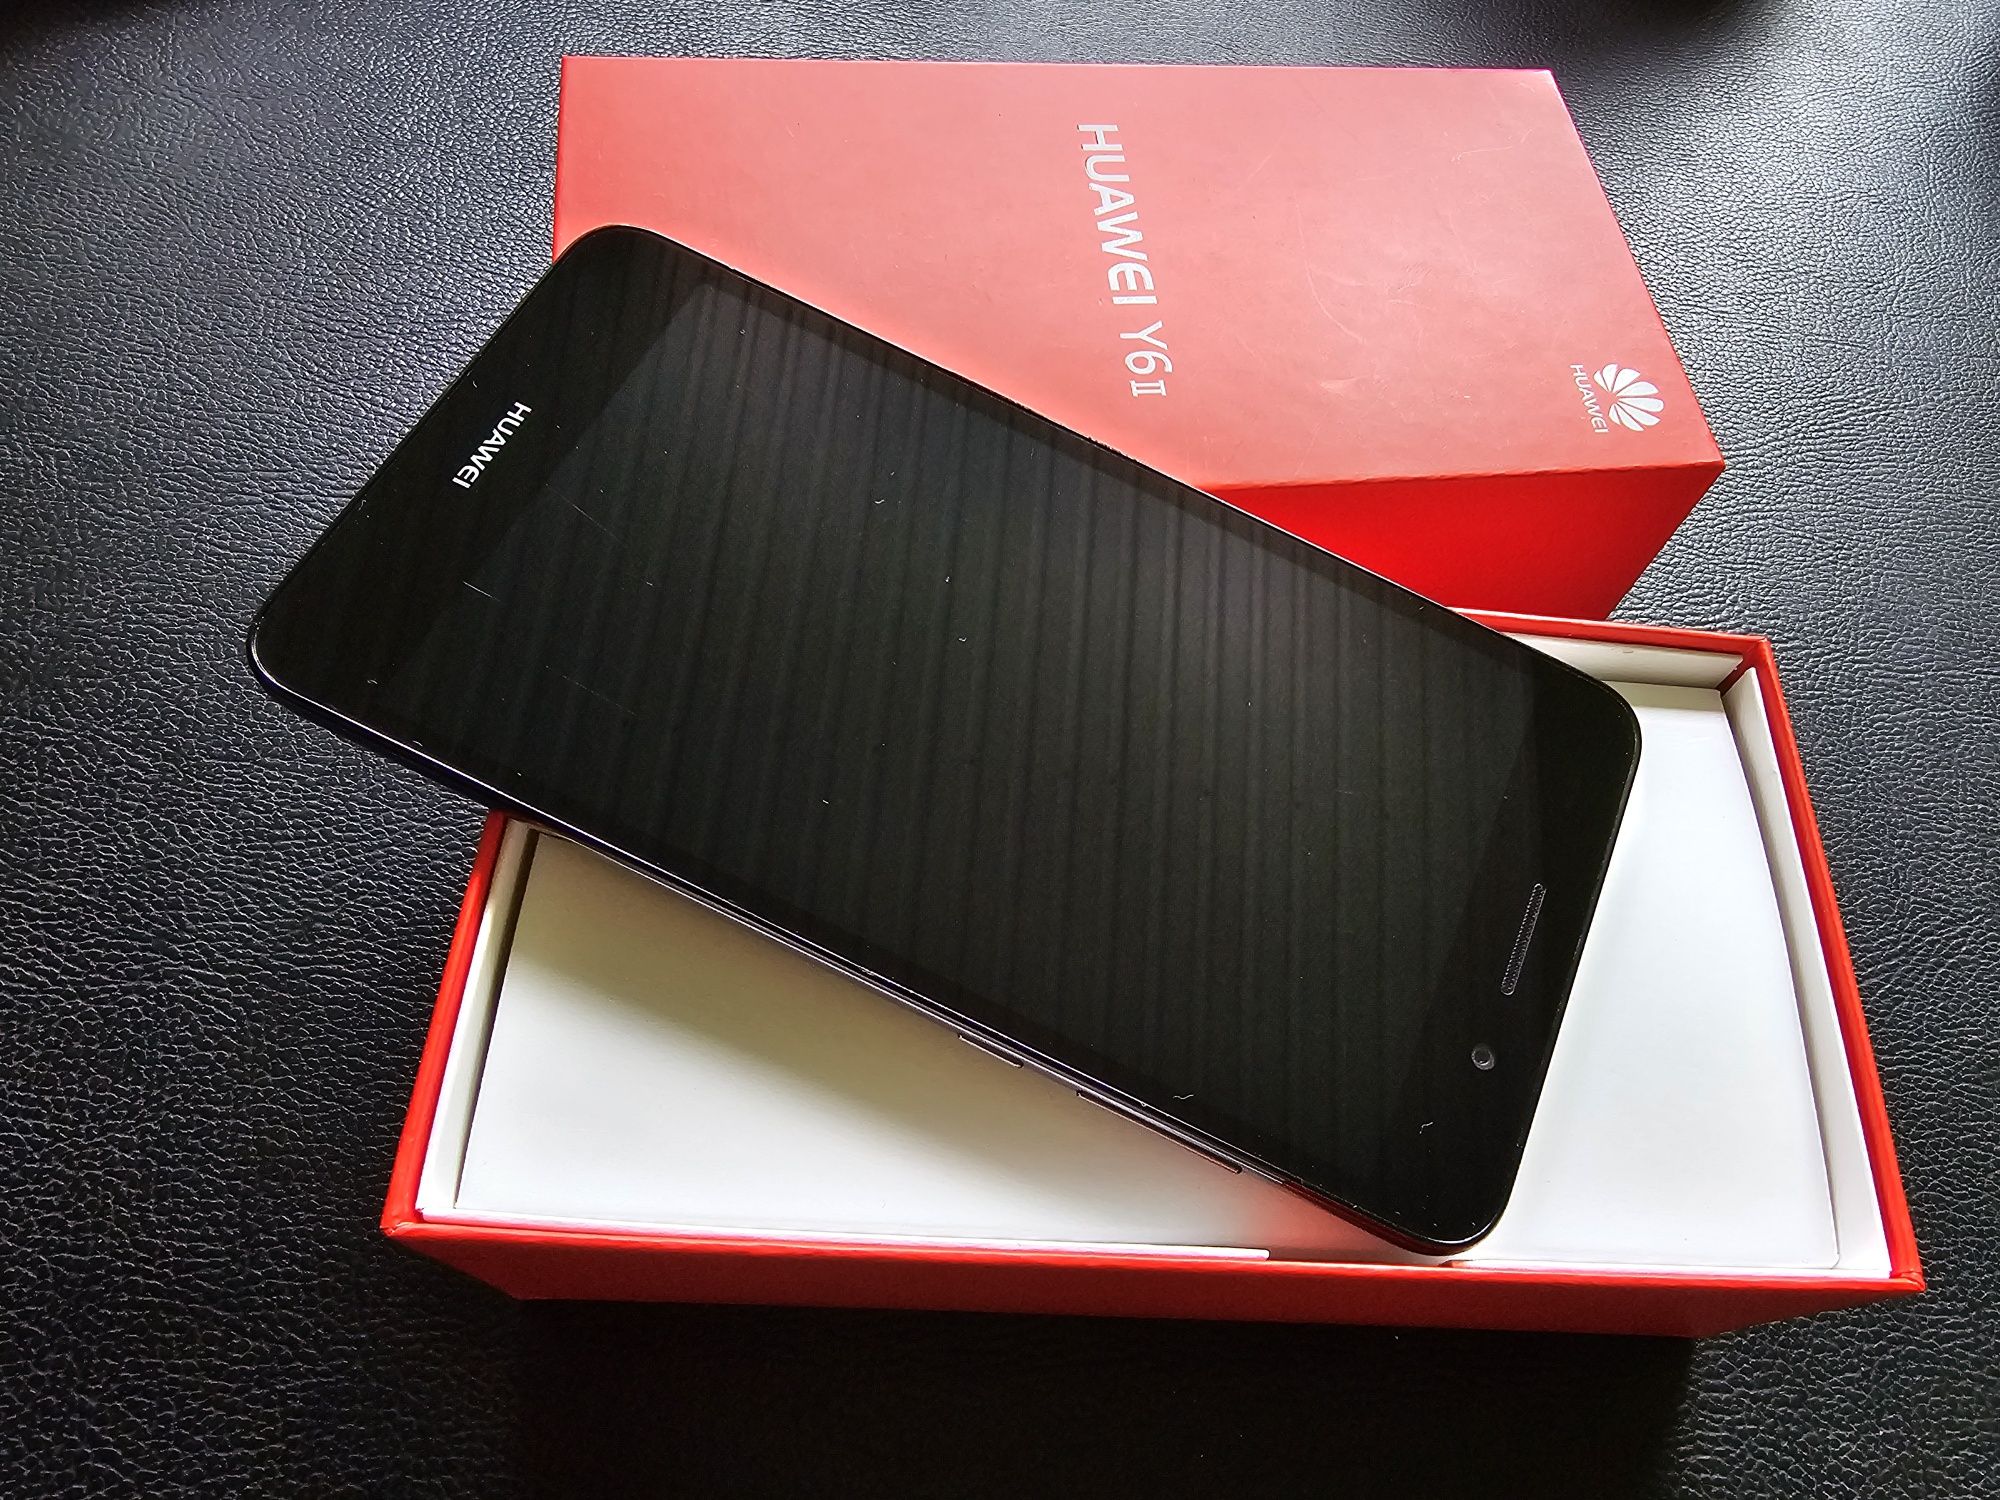 Smartfon Huawei Y6 II Compact 2 GB / 16 GB 4G (LTE) czarny